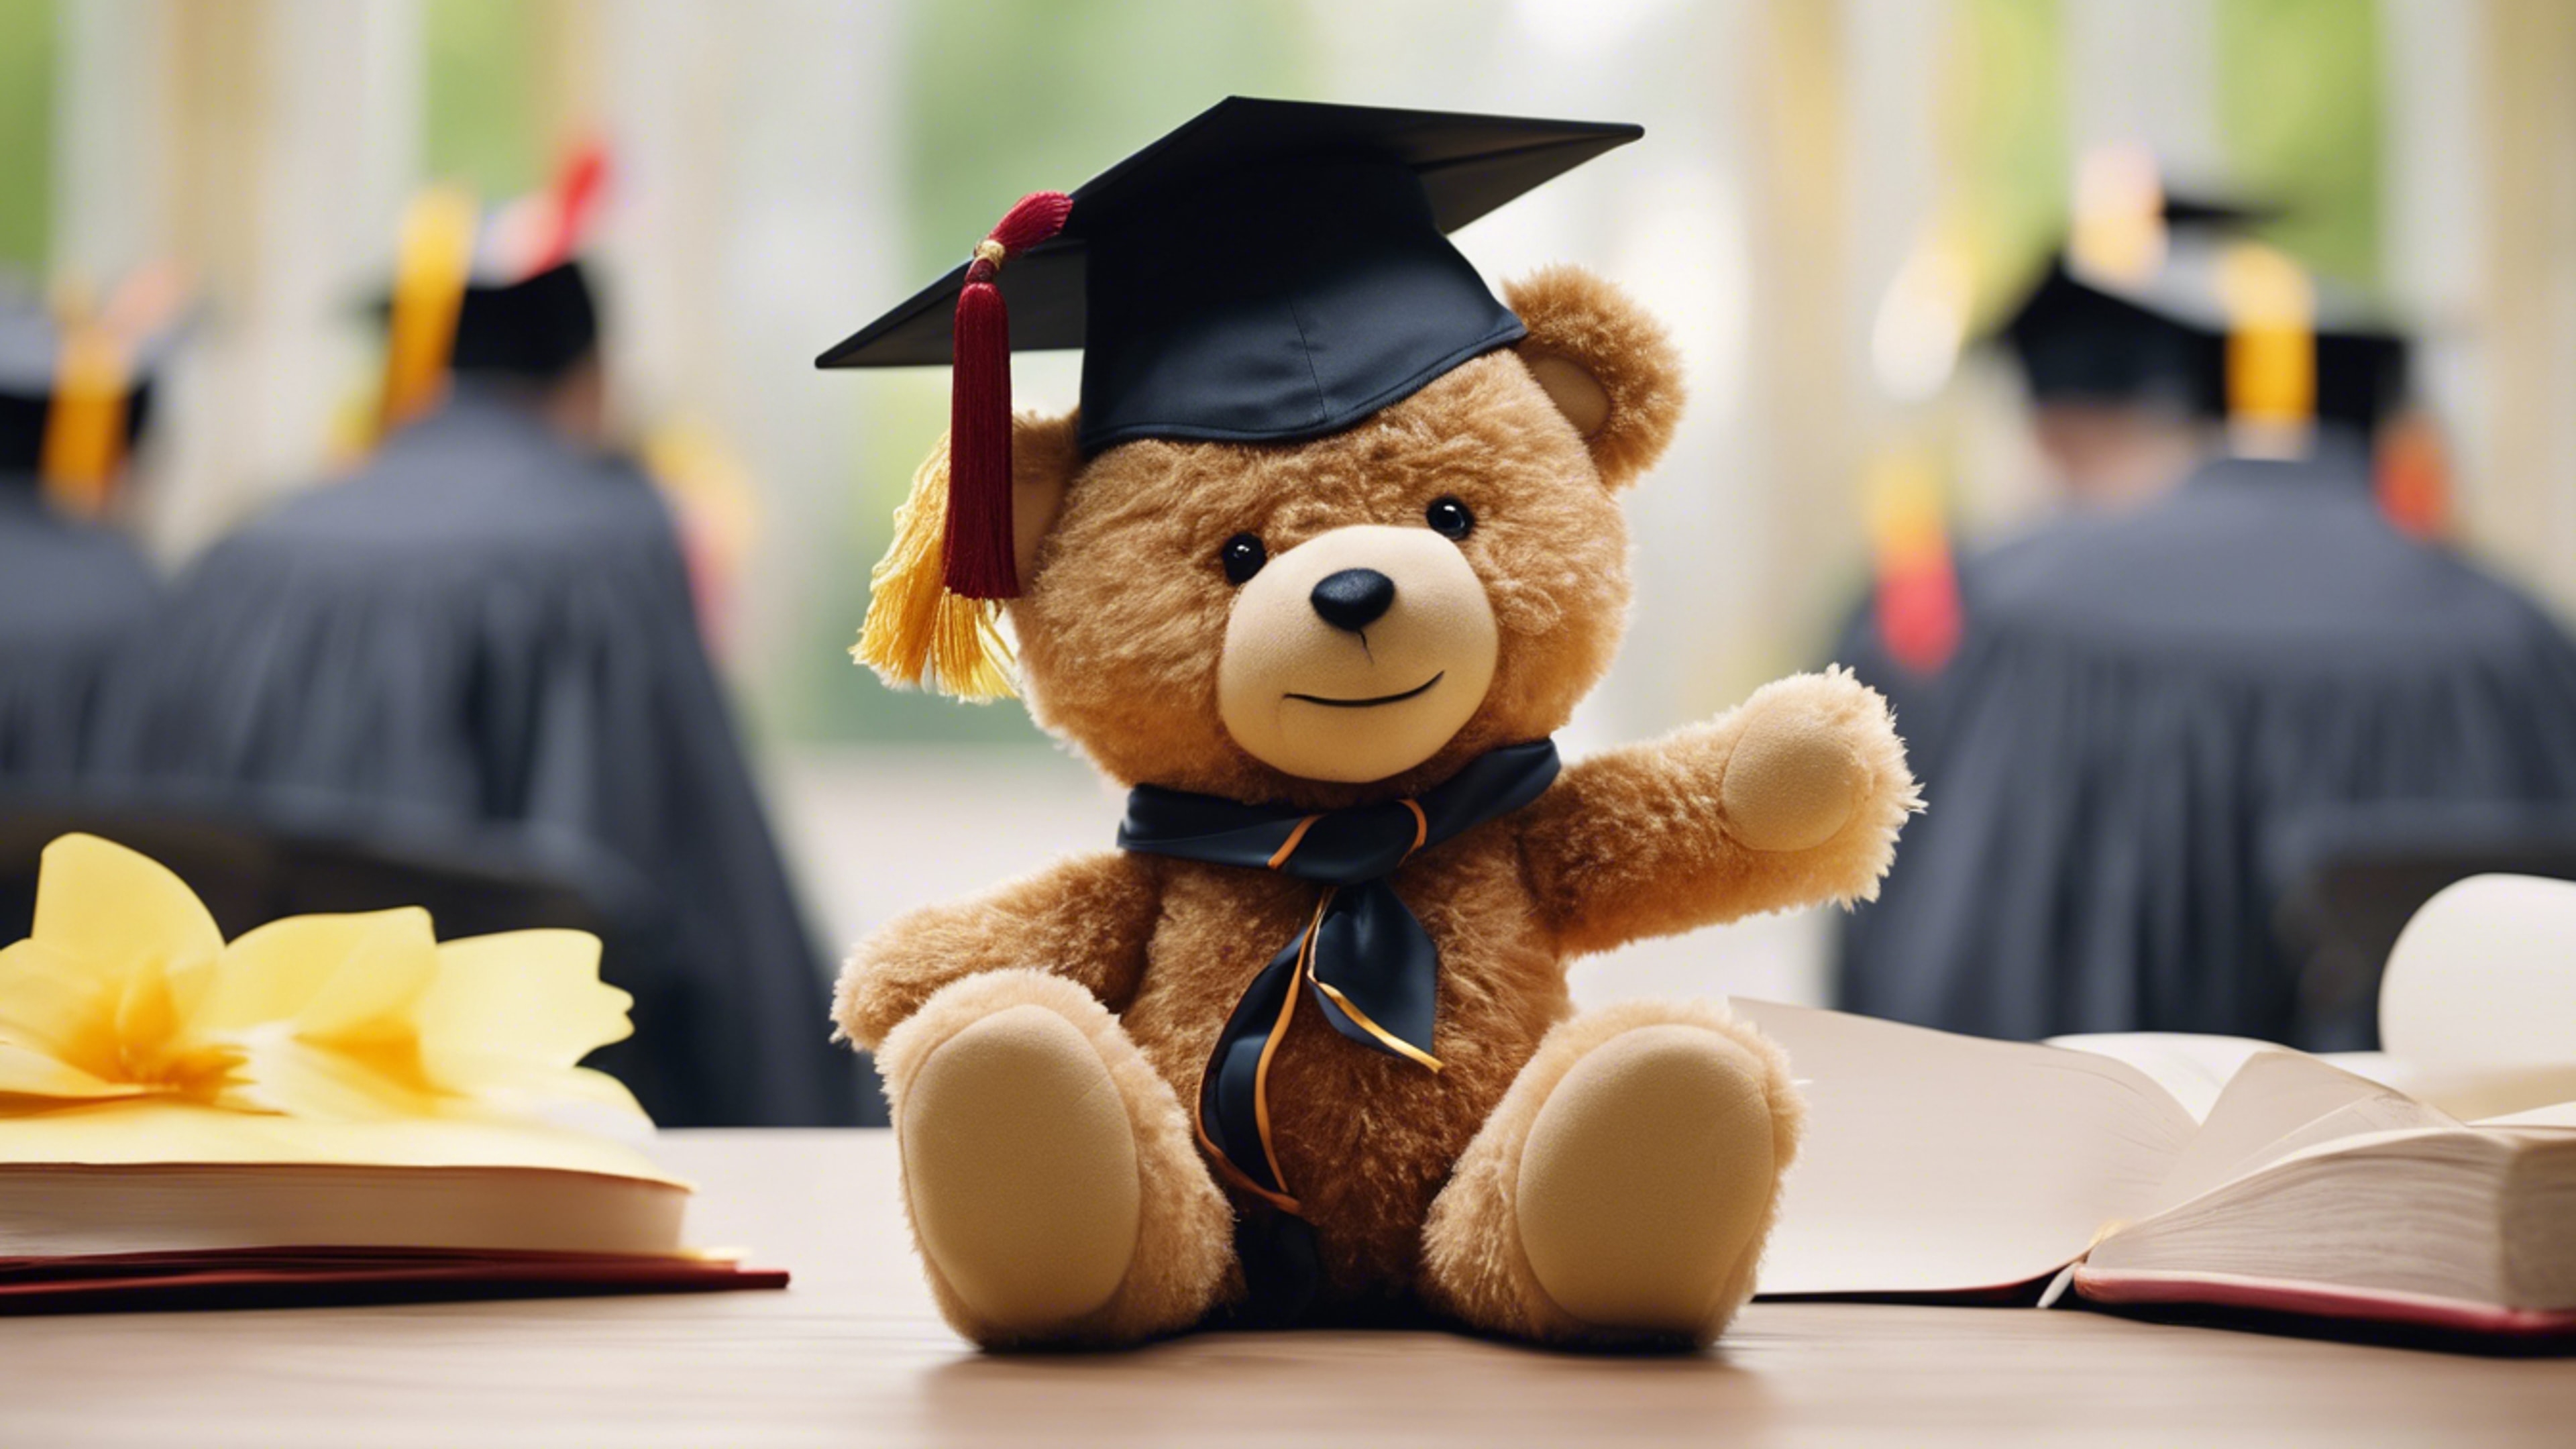 A teddy bear wearing graduation cap and diploma, amidst a graduation ceremony. Hintergrund[88eefa047aa0490a9f74]